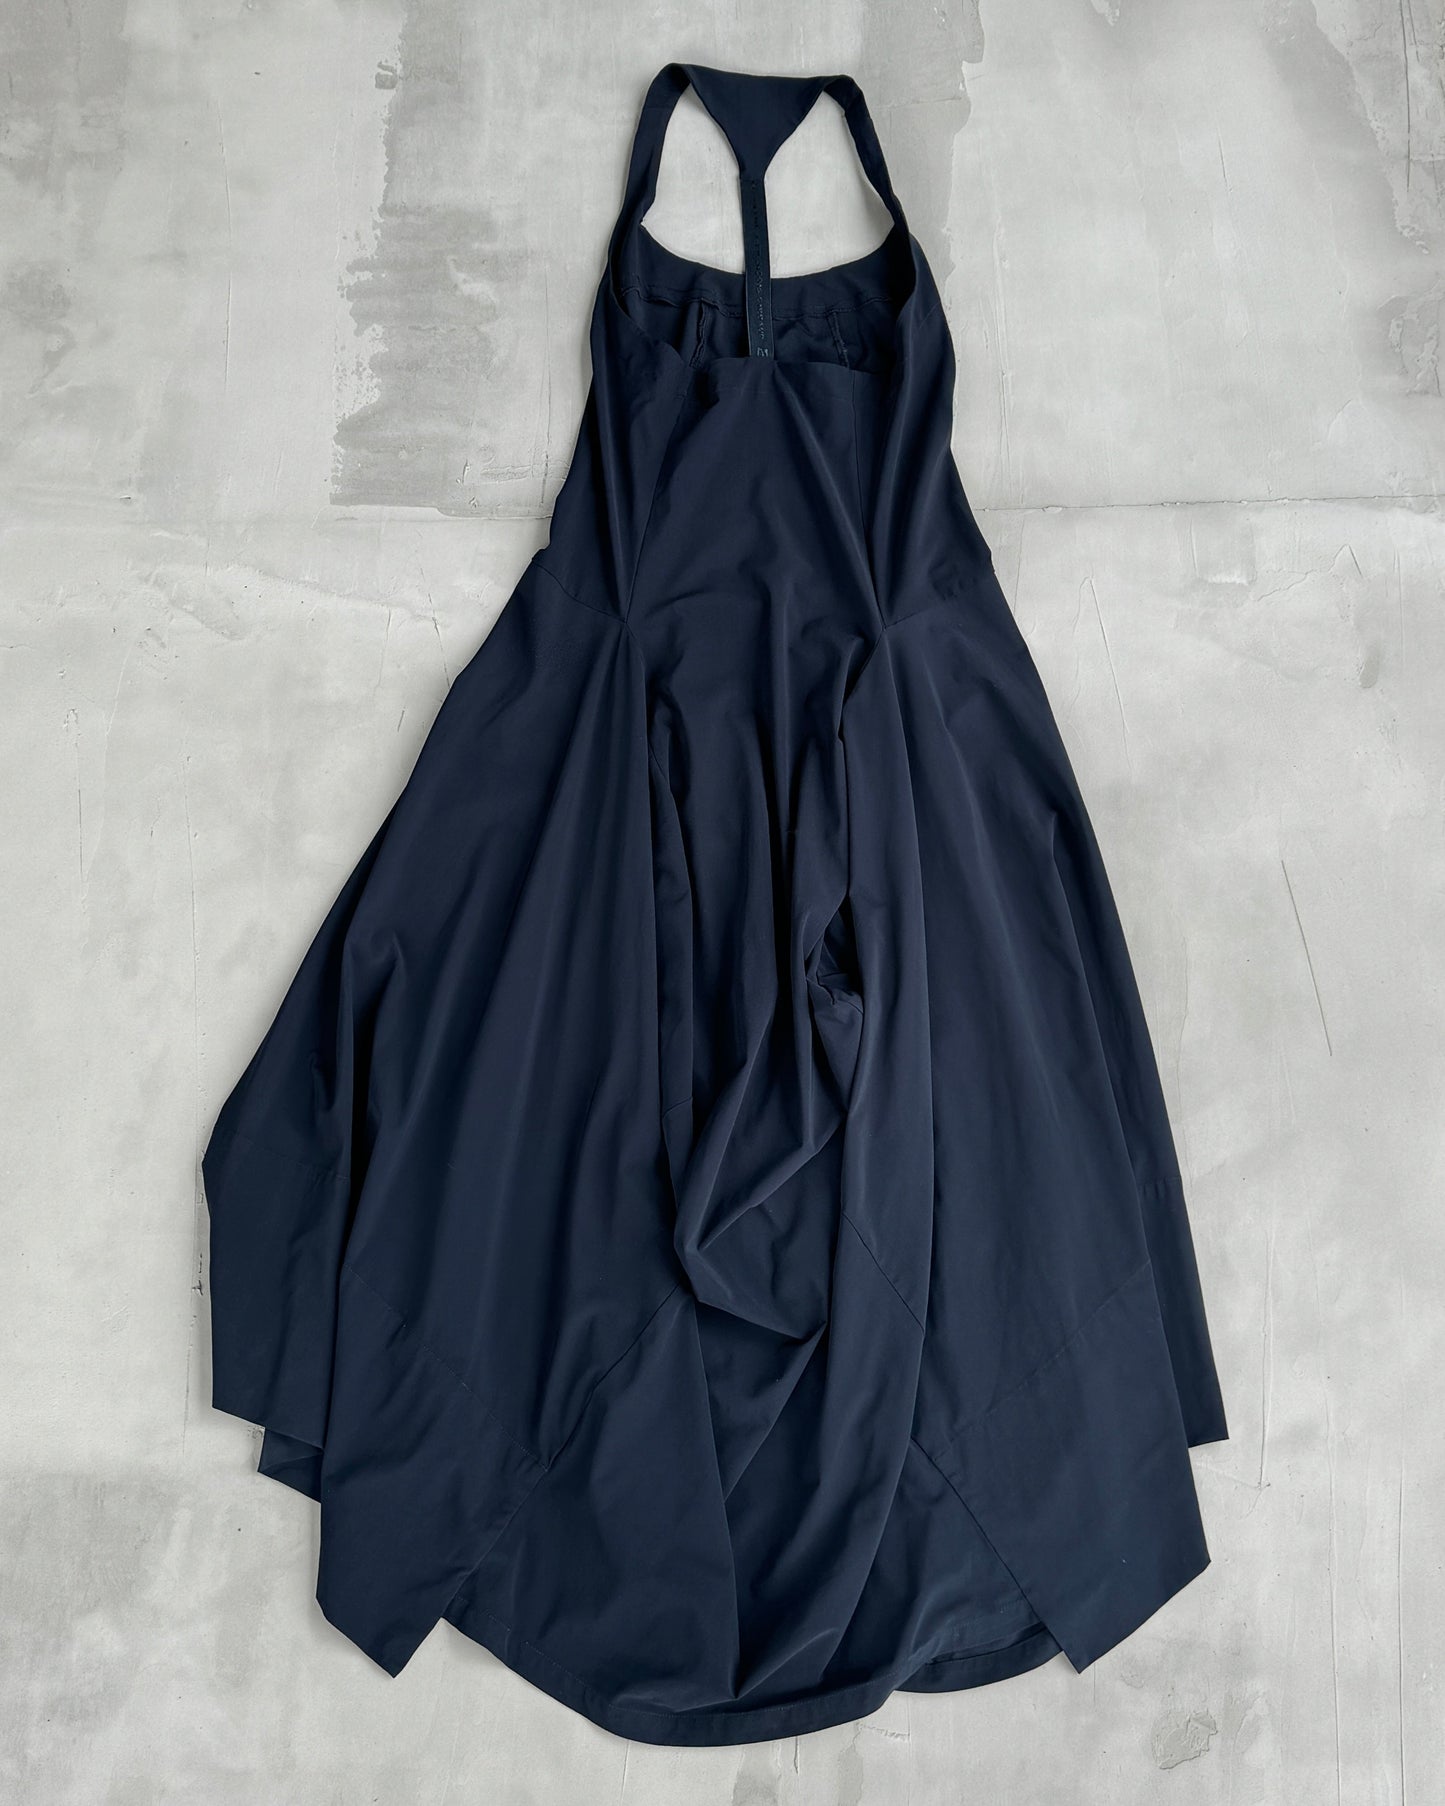 MARITHE FRANCOIS GIRBAUD MFG BLACK TRIANGLE DRESS - S/M